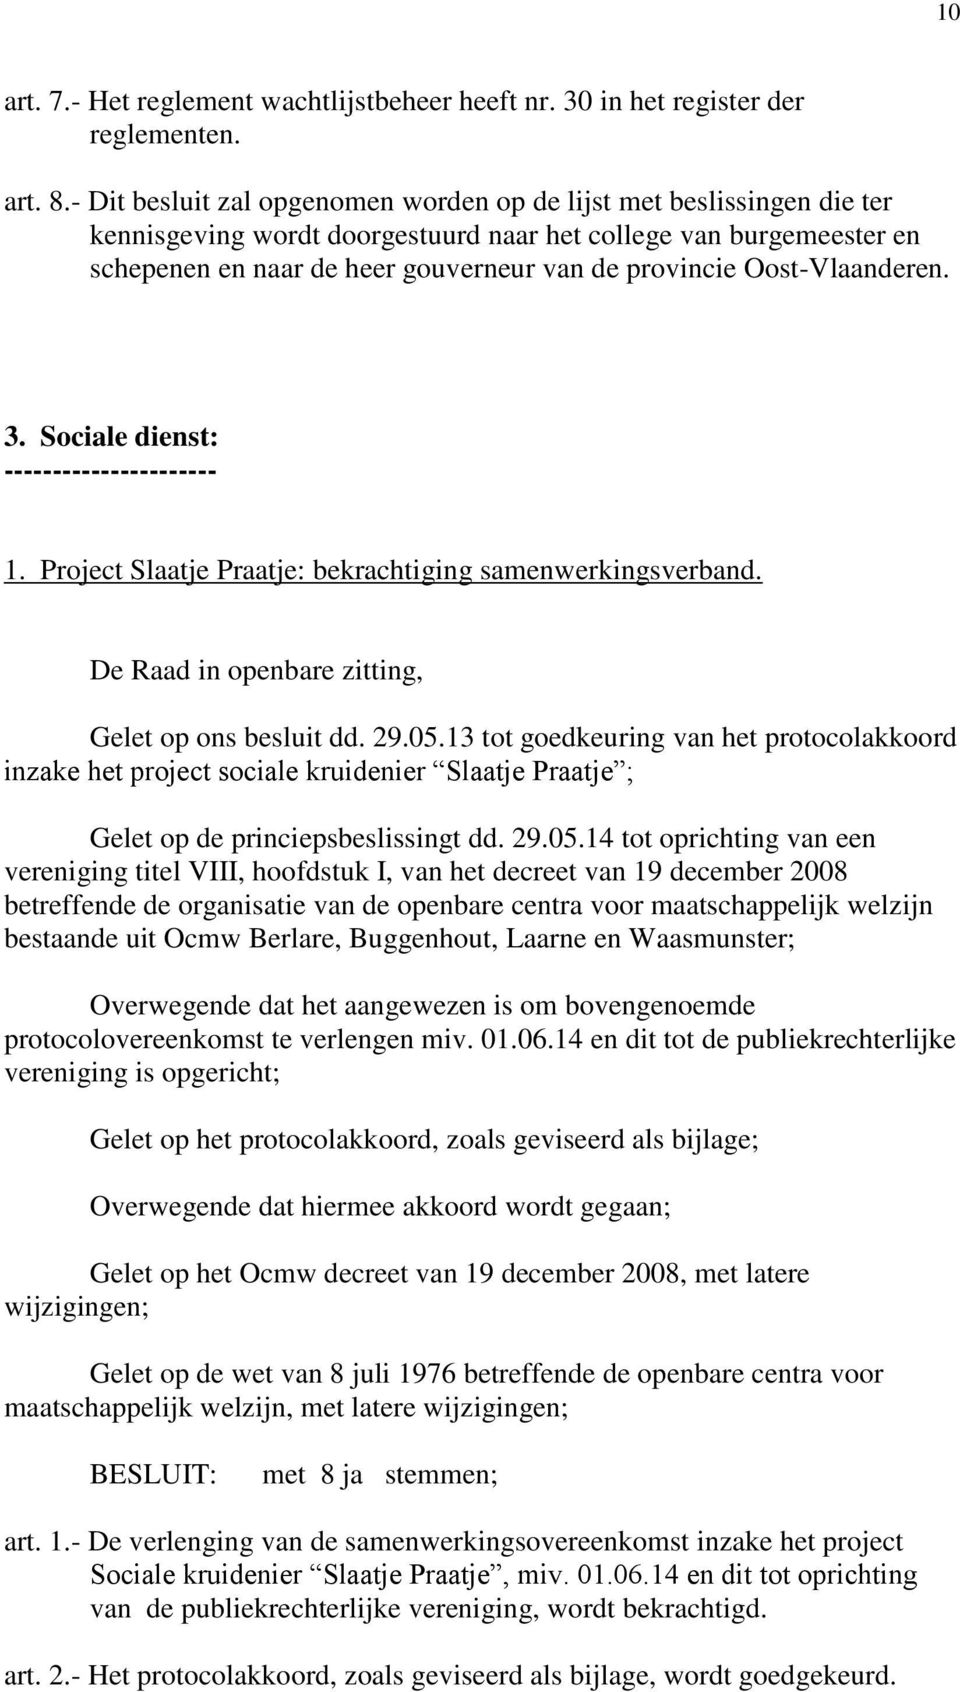 Project Slaatje Praatje: bekrachtiging samenwerkingsverband. Gelet op ons besluit dd. 29.05.